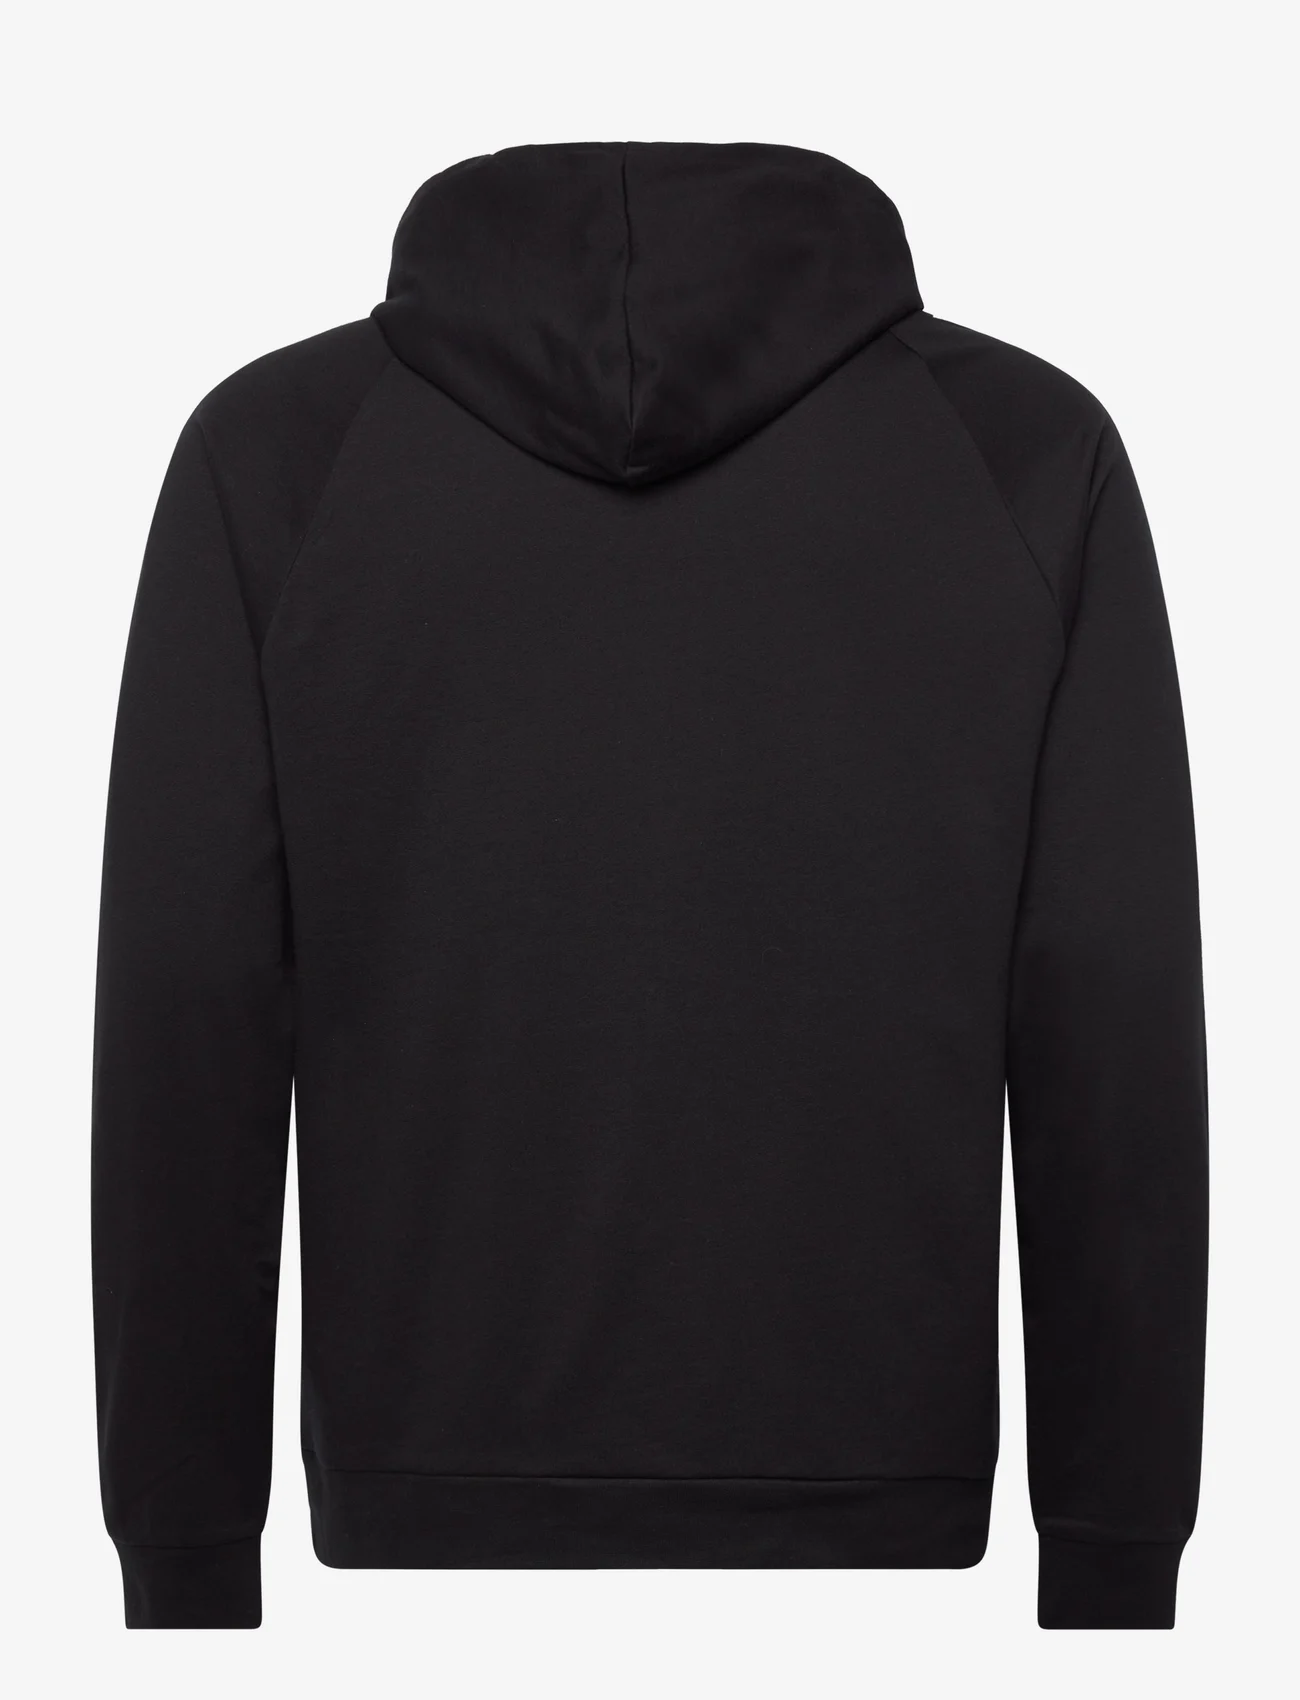 BOSS - Authentic Jacket H - hoodies - black - 1